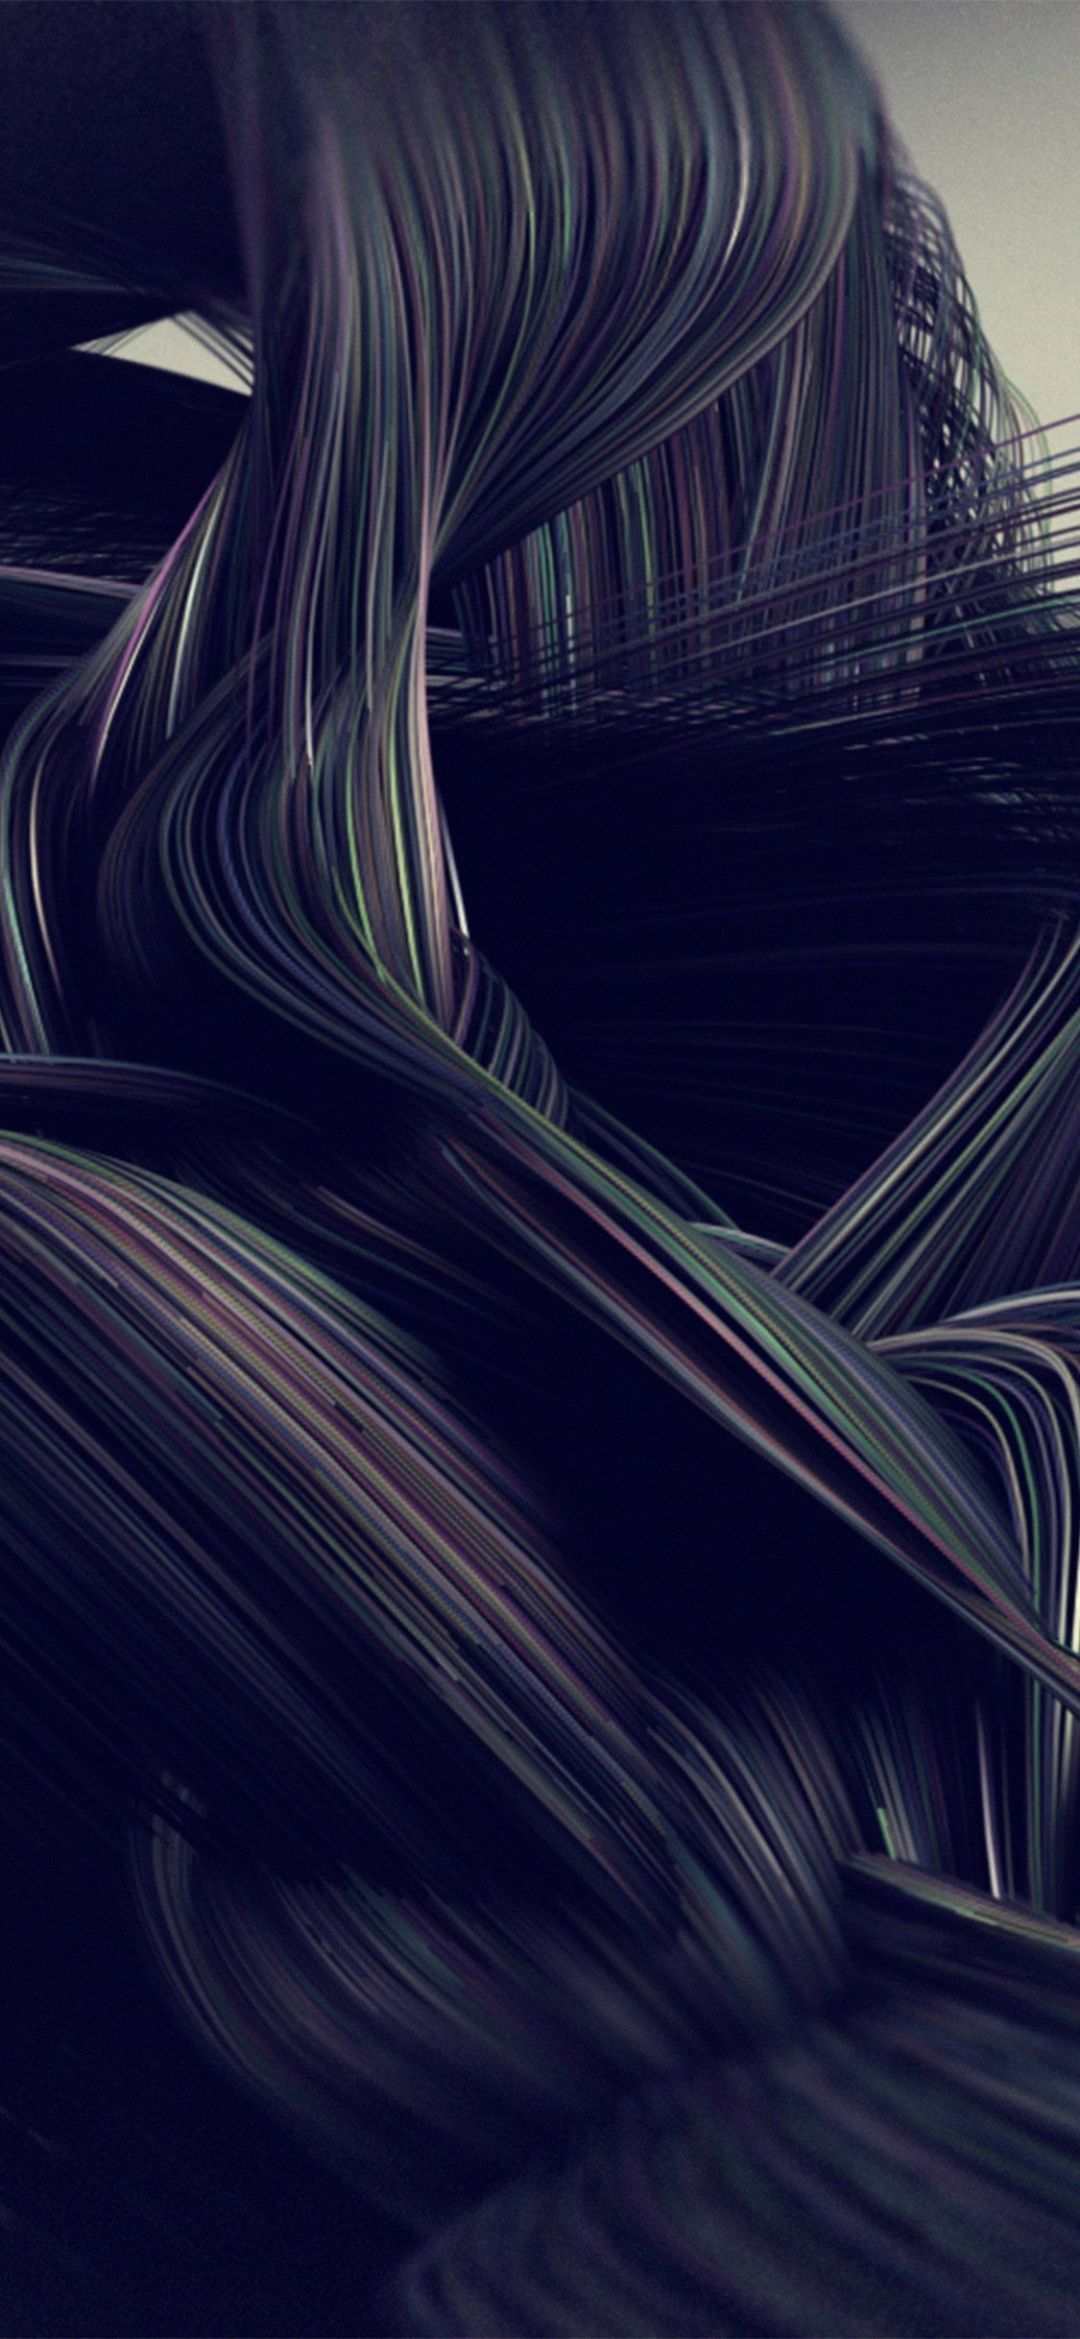 iPhoneXpapers.com | iPhone X wallpaper | vk02-line-art-abstract-dark -bw-smoke-pattern